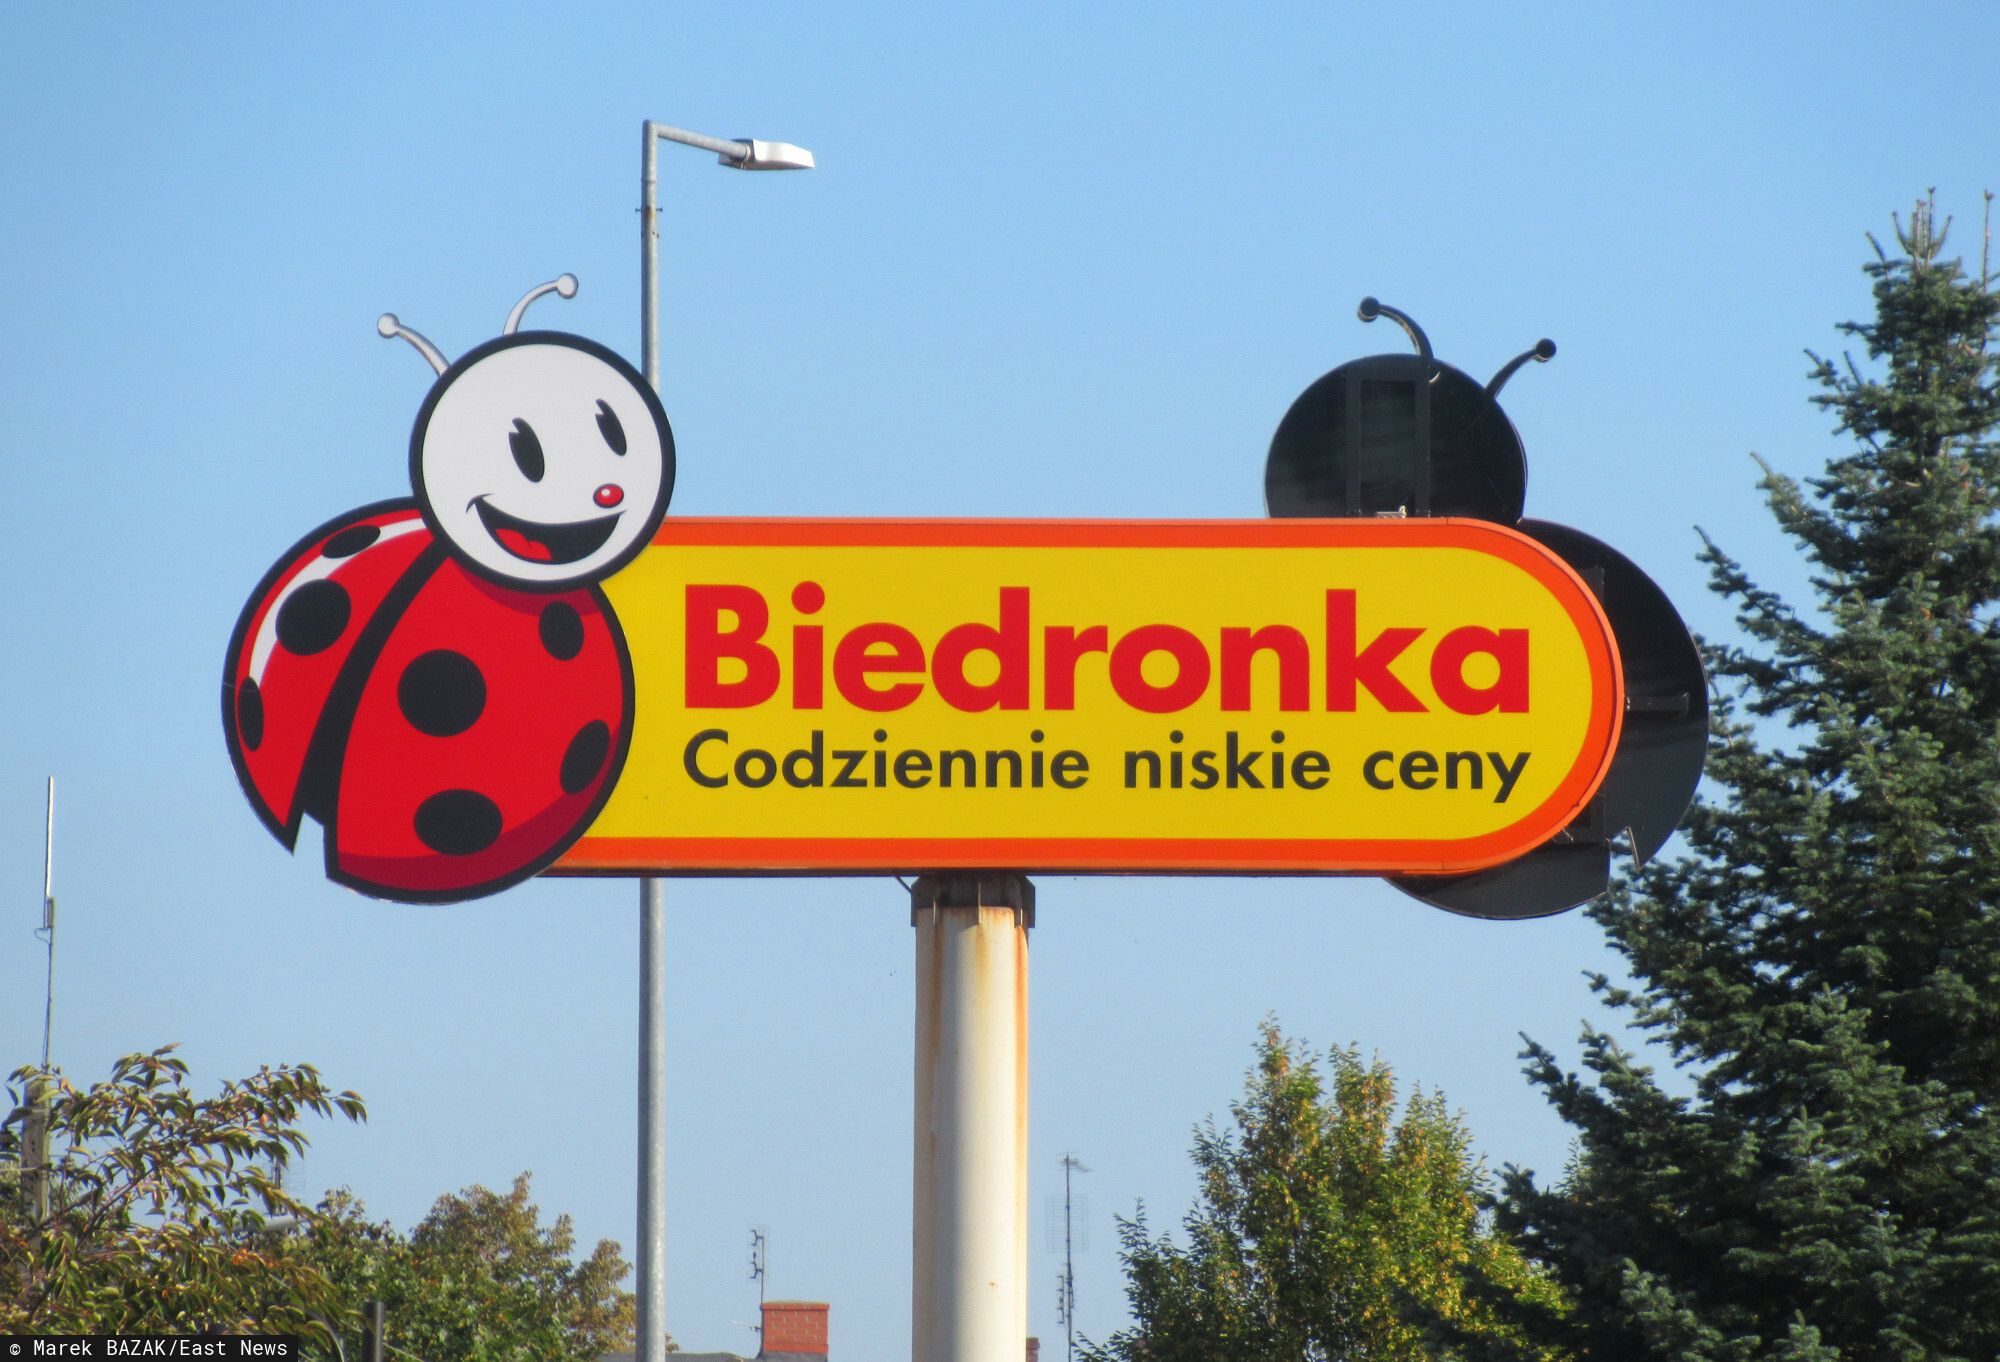 Biedronka logo